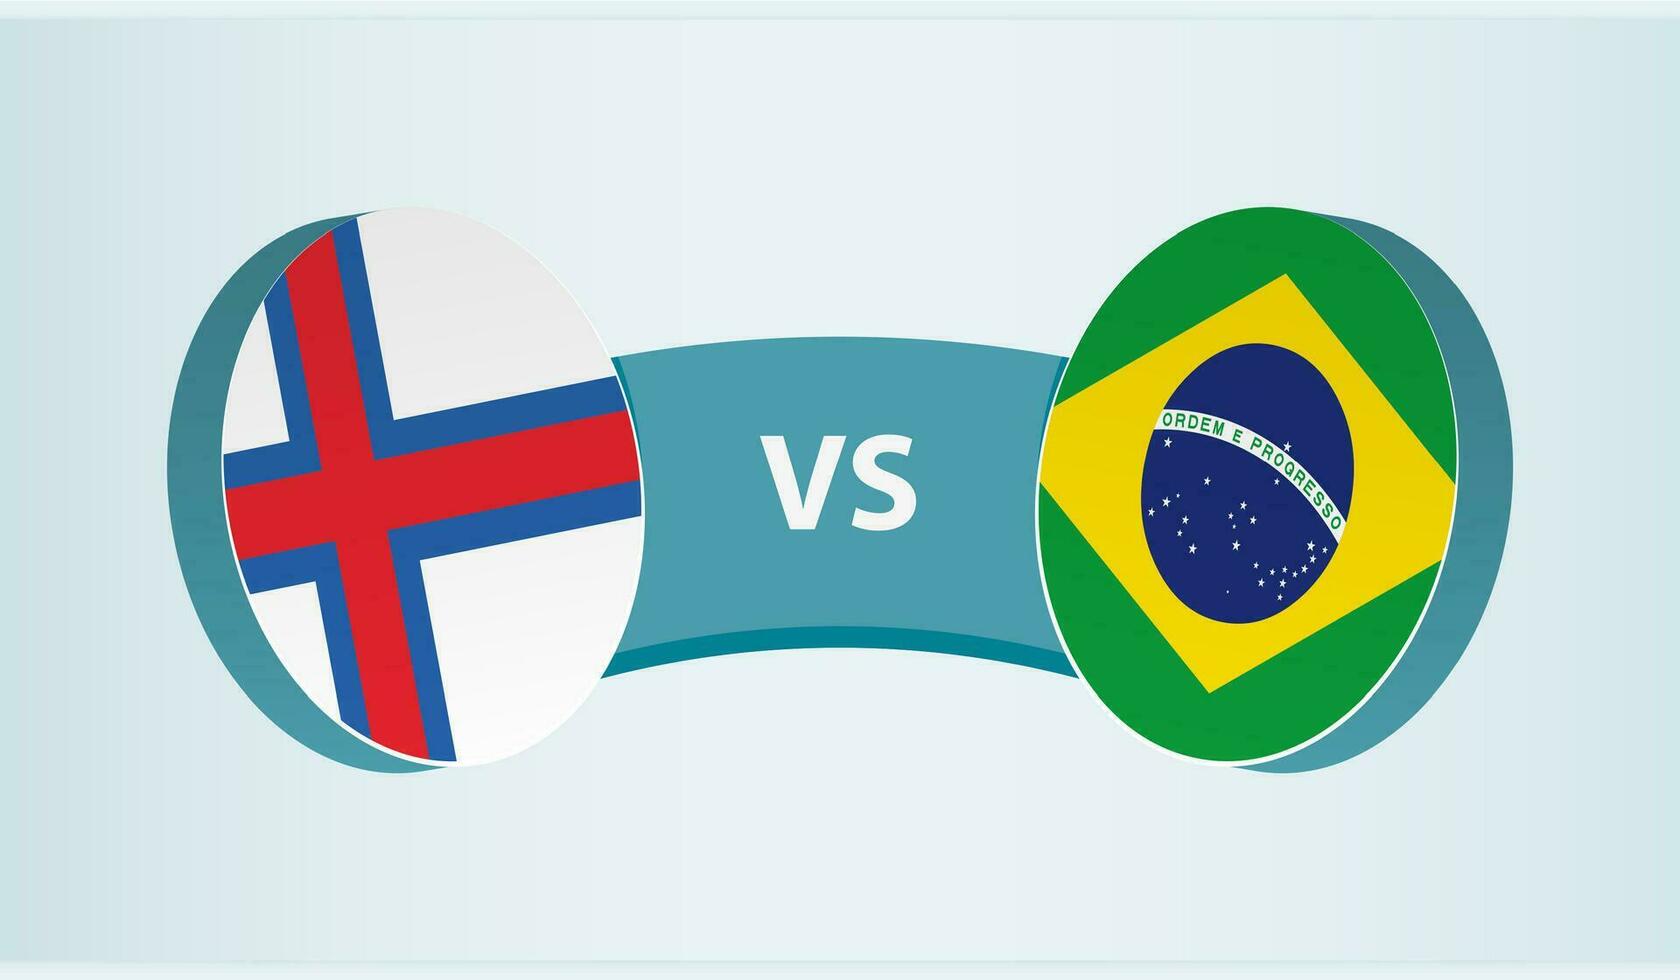 Faroe Islands versus Brazil, team sports competition concept. vector